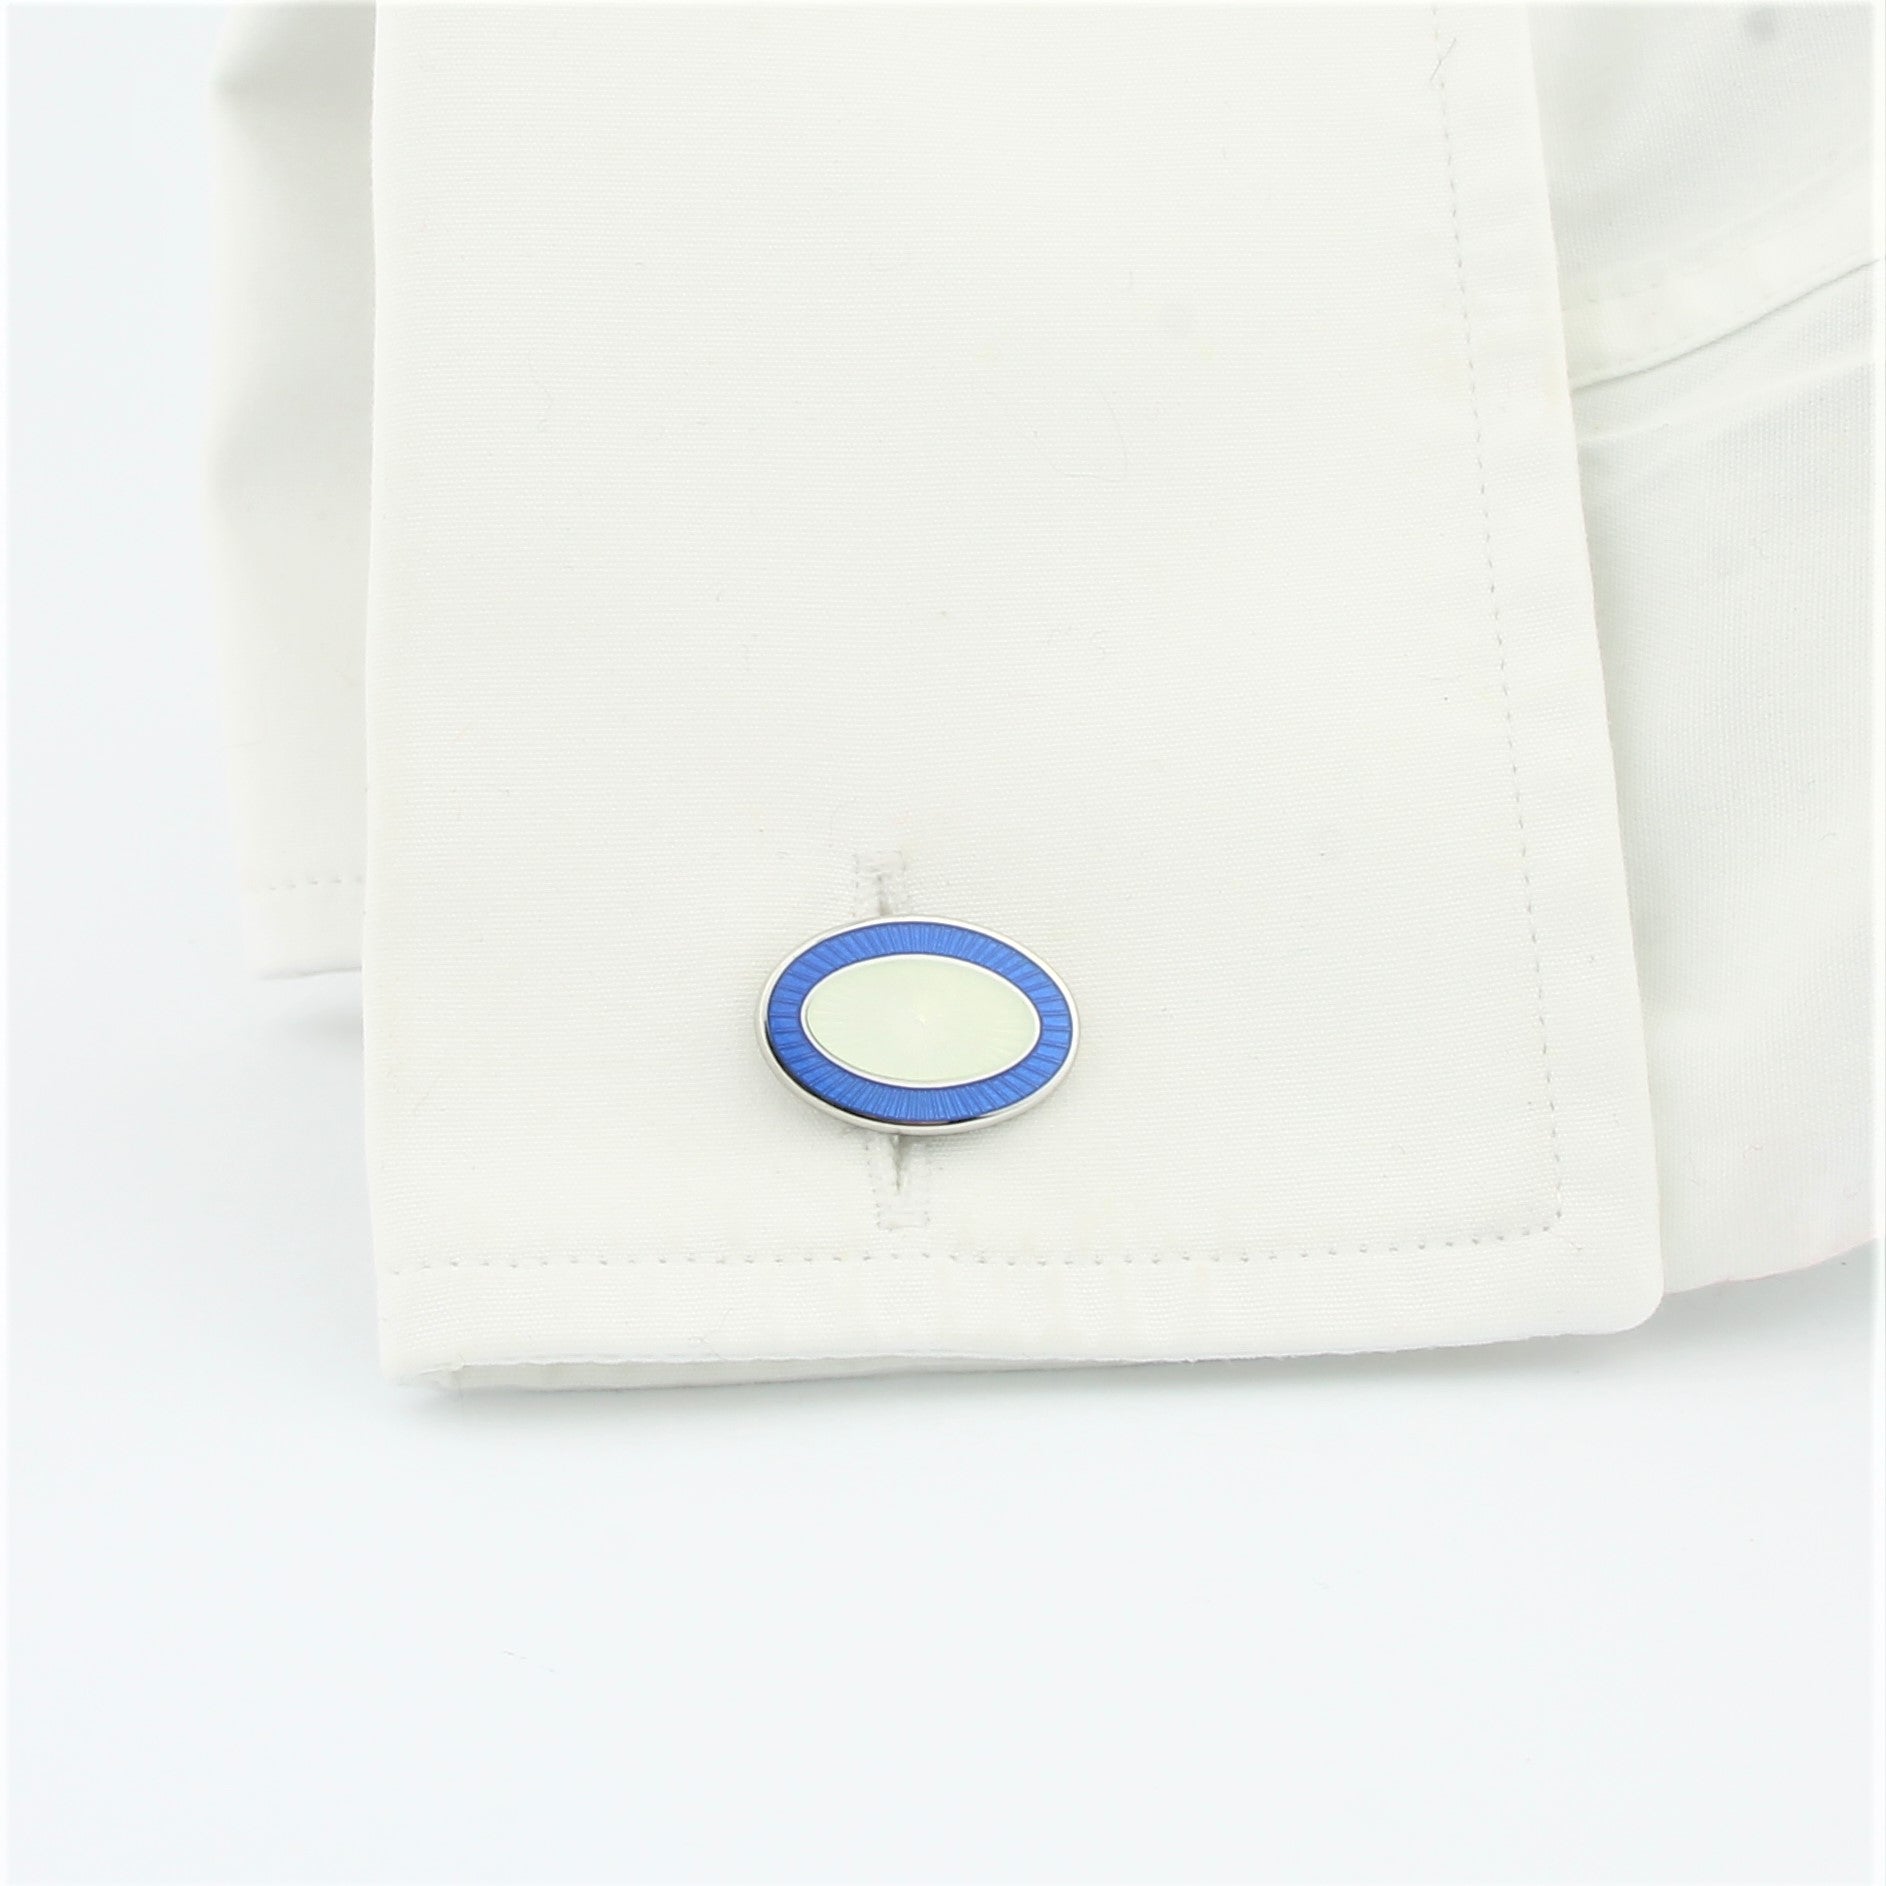 Double Oval Pale Blue/White cufflinks in a cuff